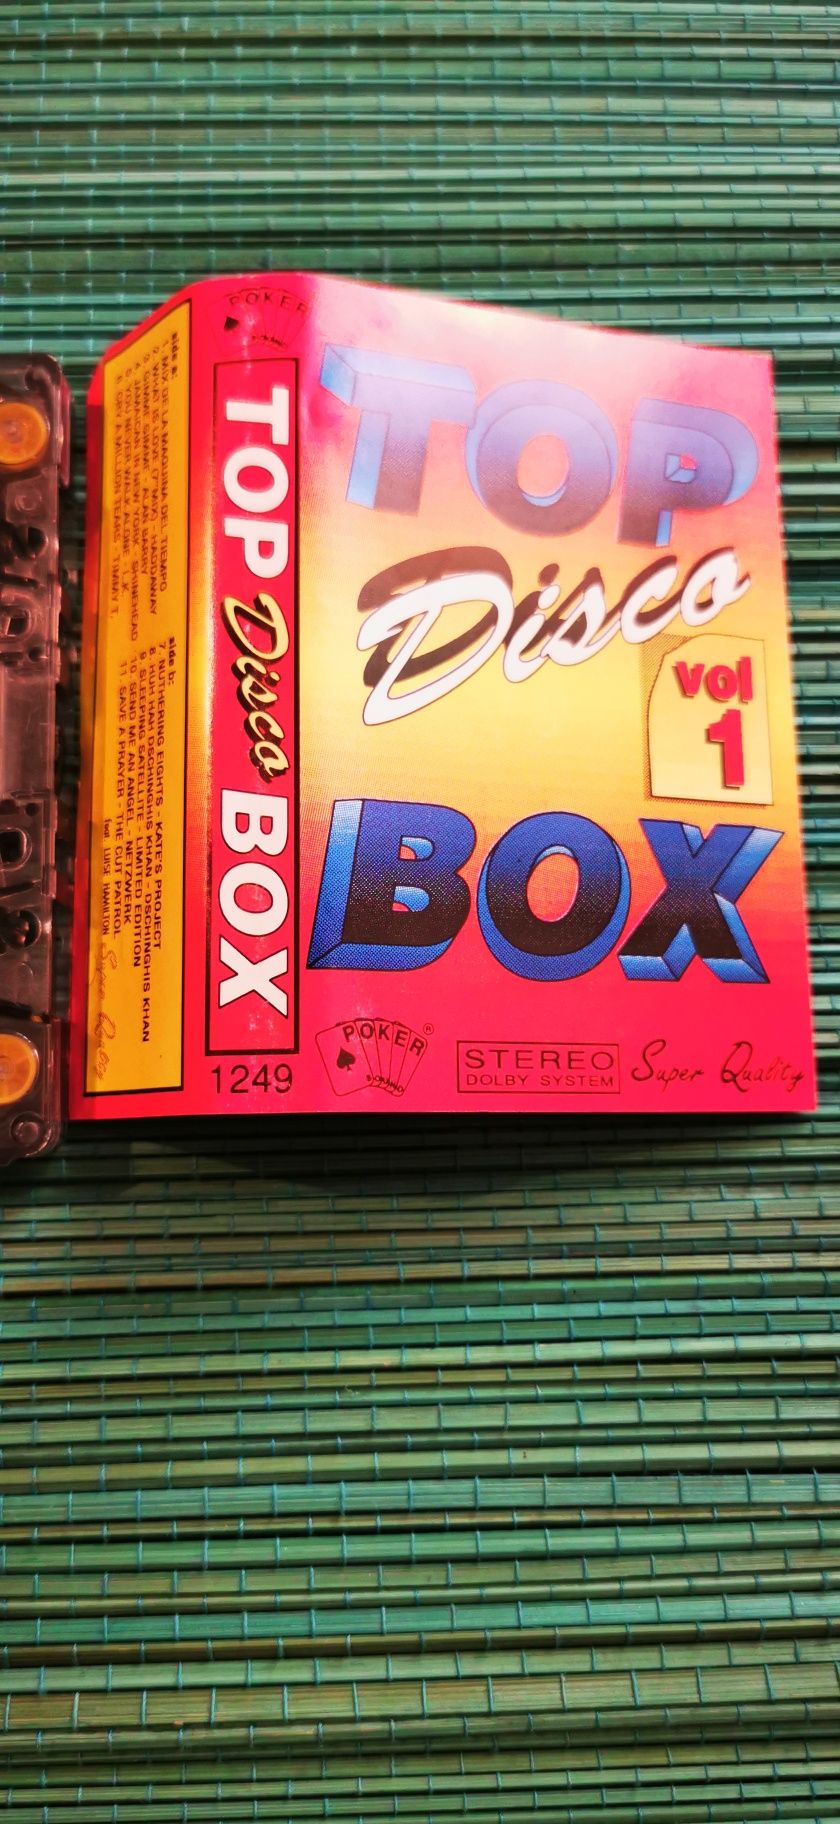 Top Disco Box vol 1 kaseta magnetofonowa